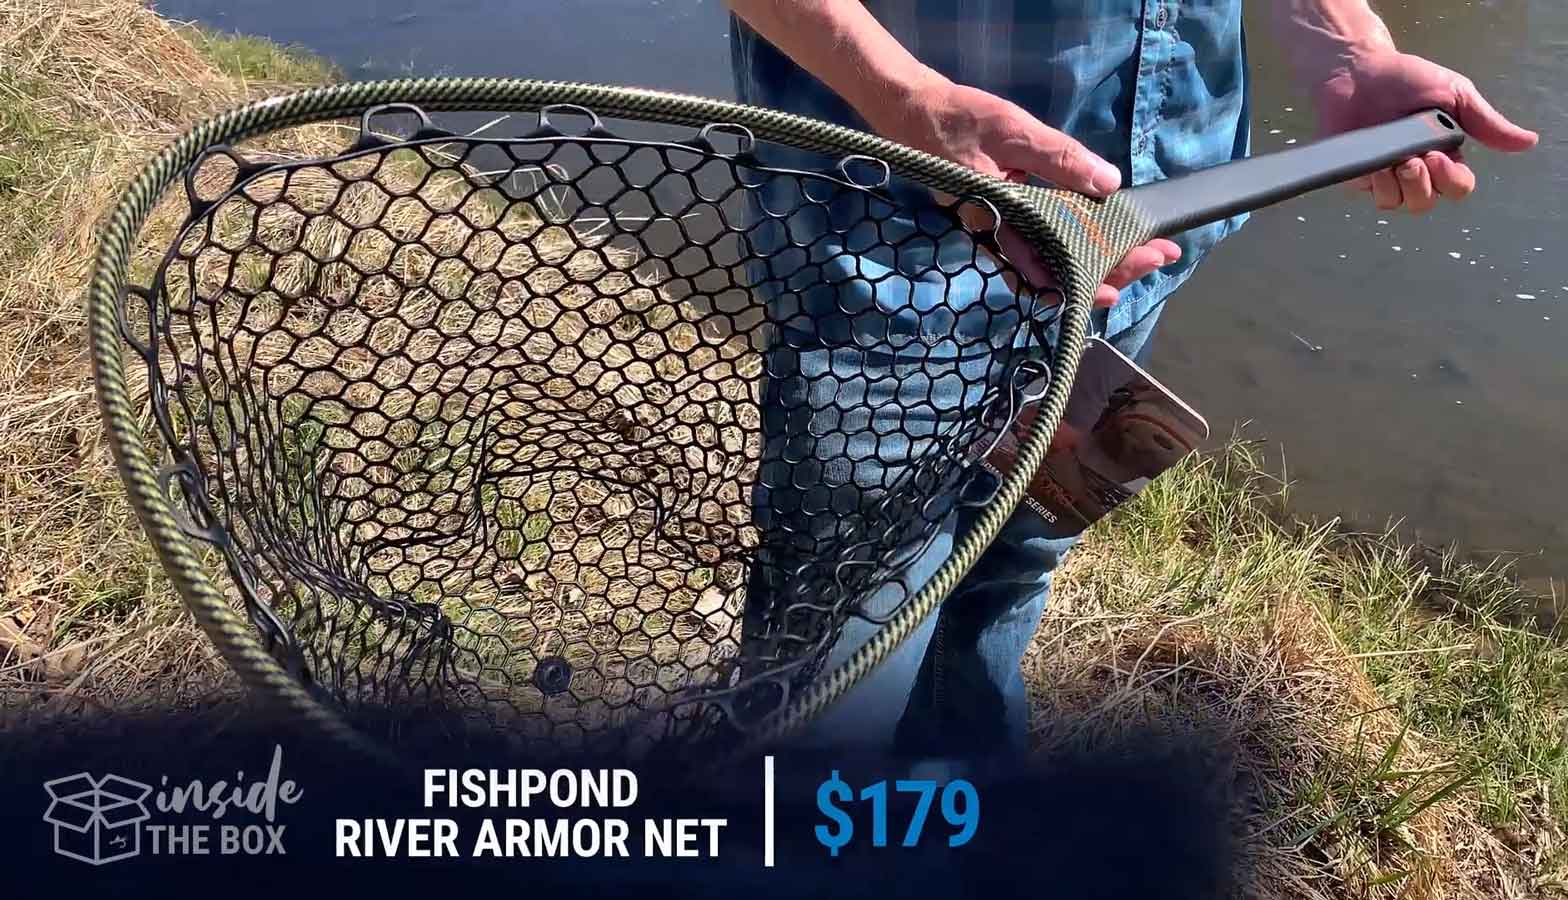 Inside the Box: Episode #50 - Fishpond River Armor Net